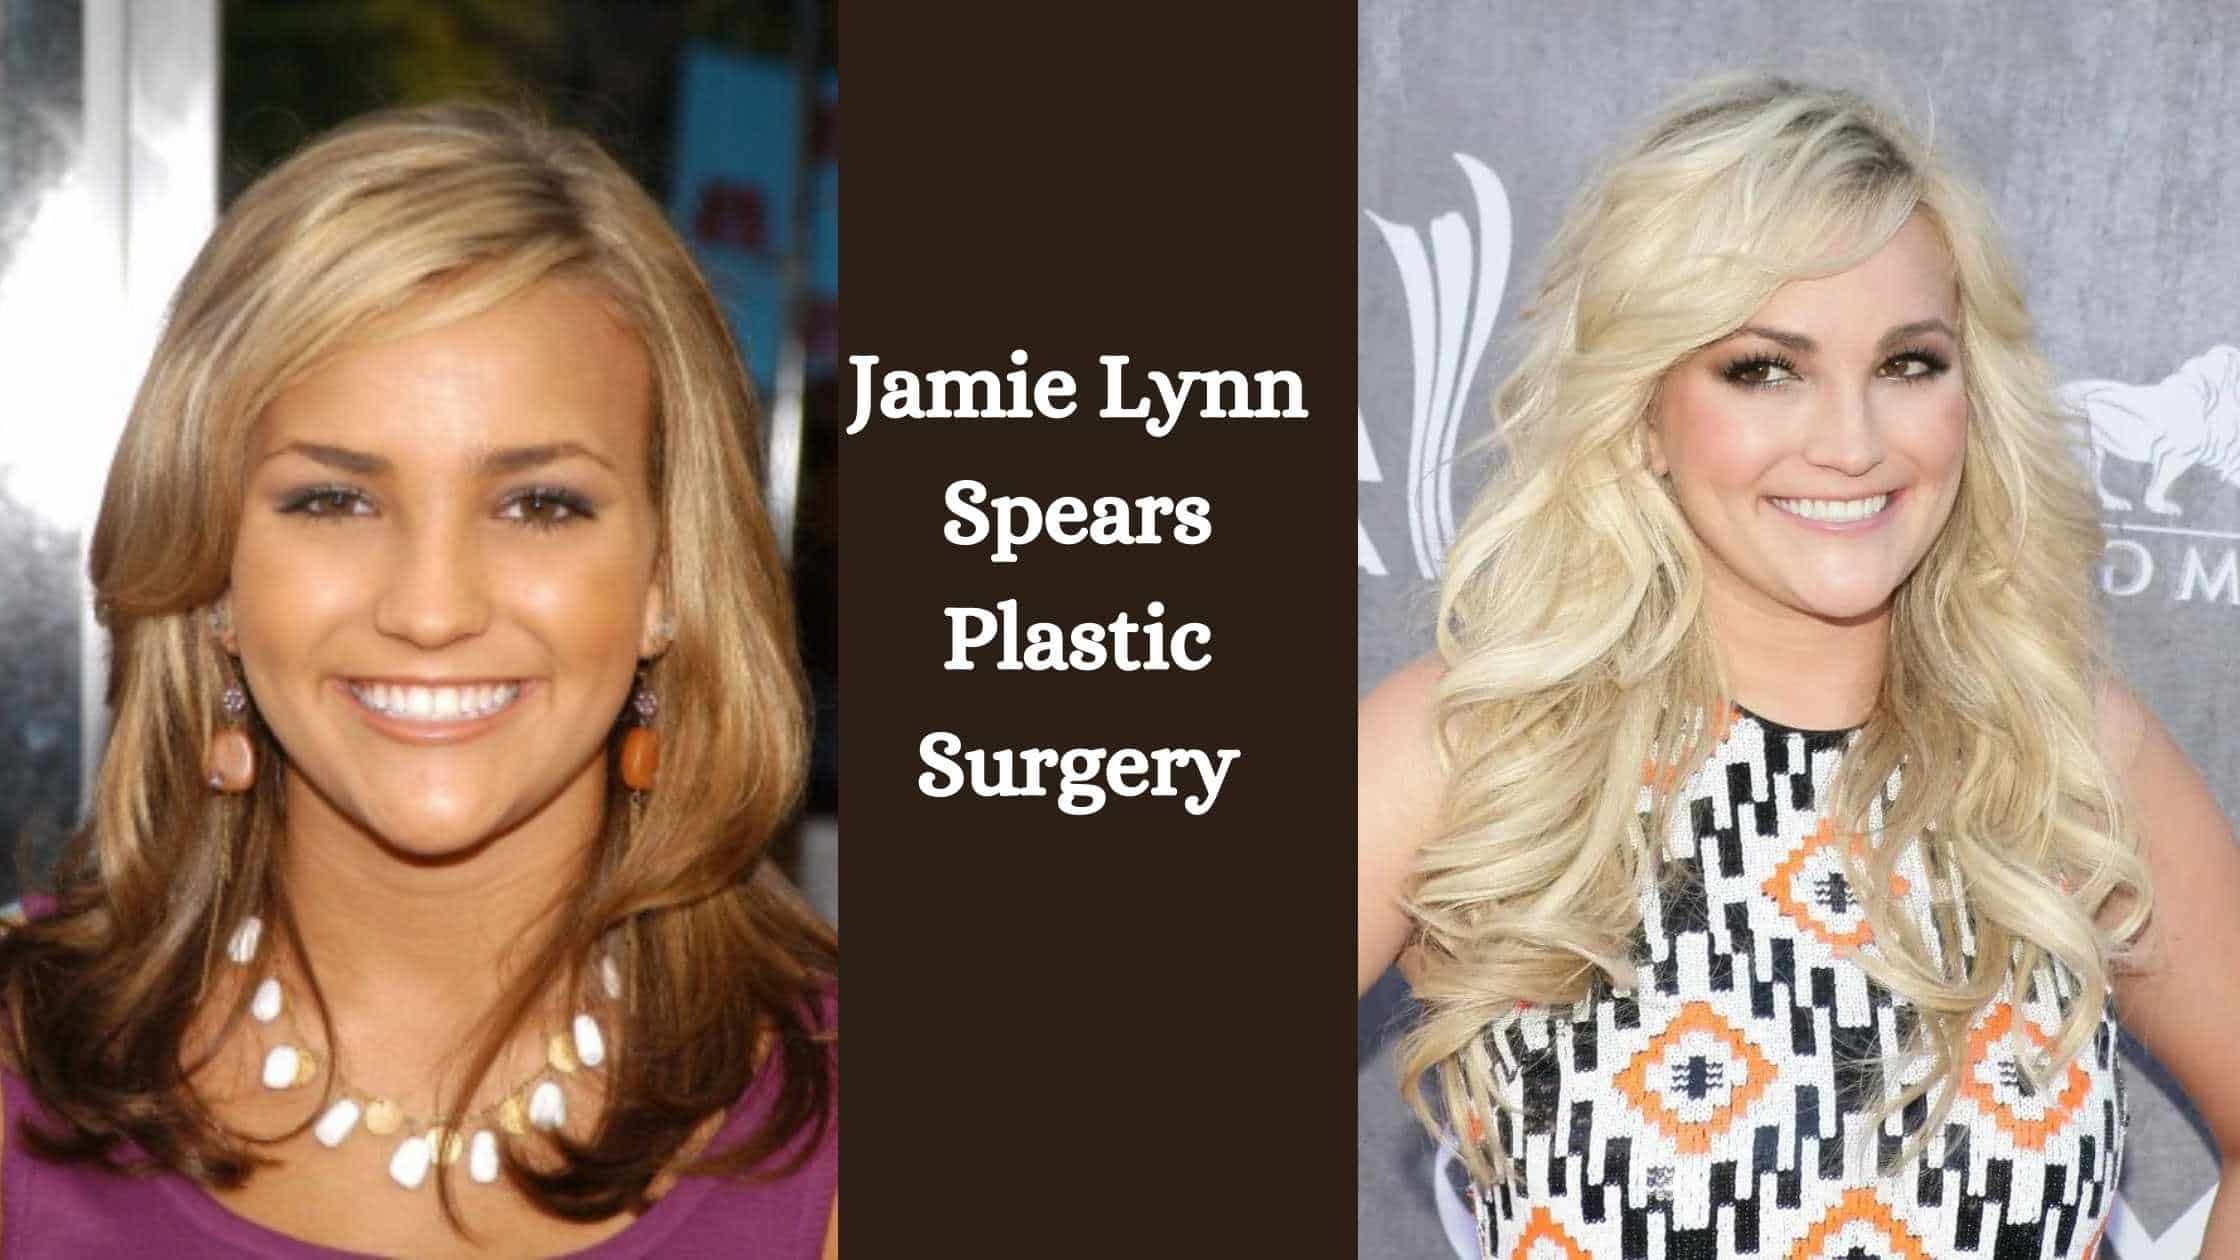 Jamie Lynn Spears Plastic Surgery